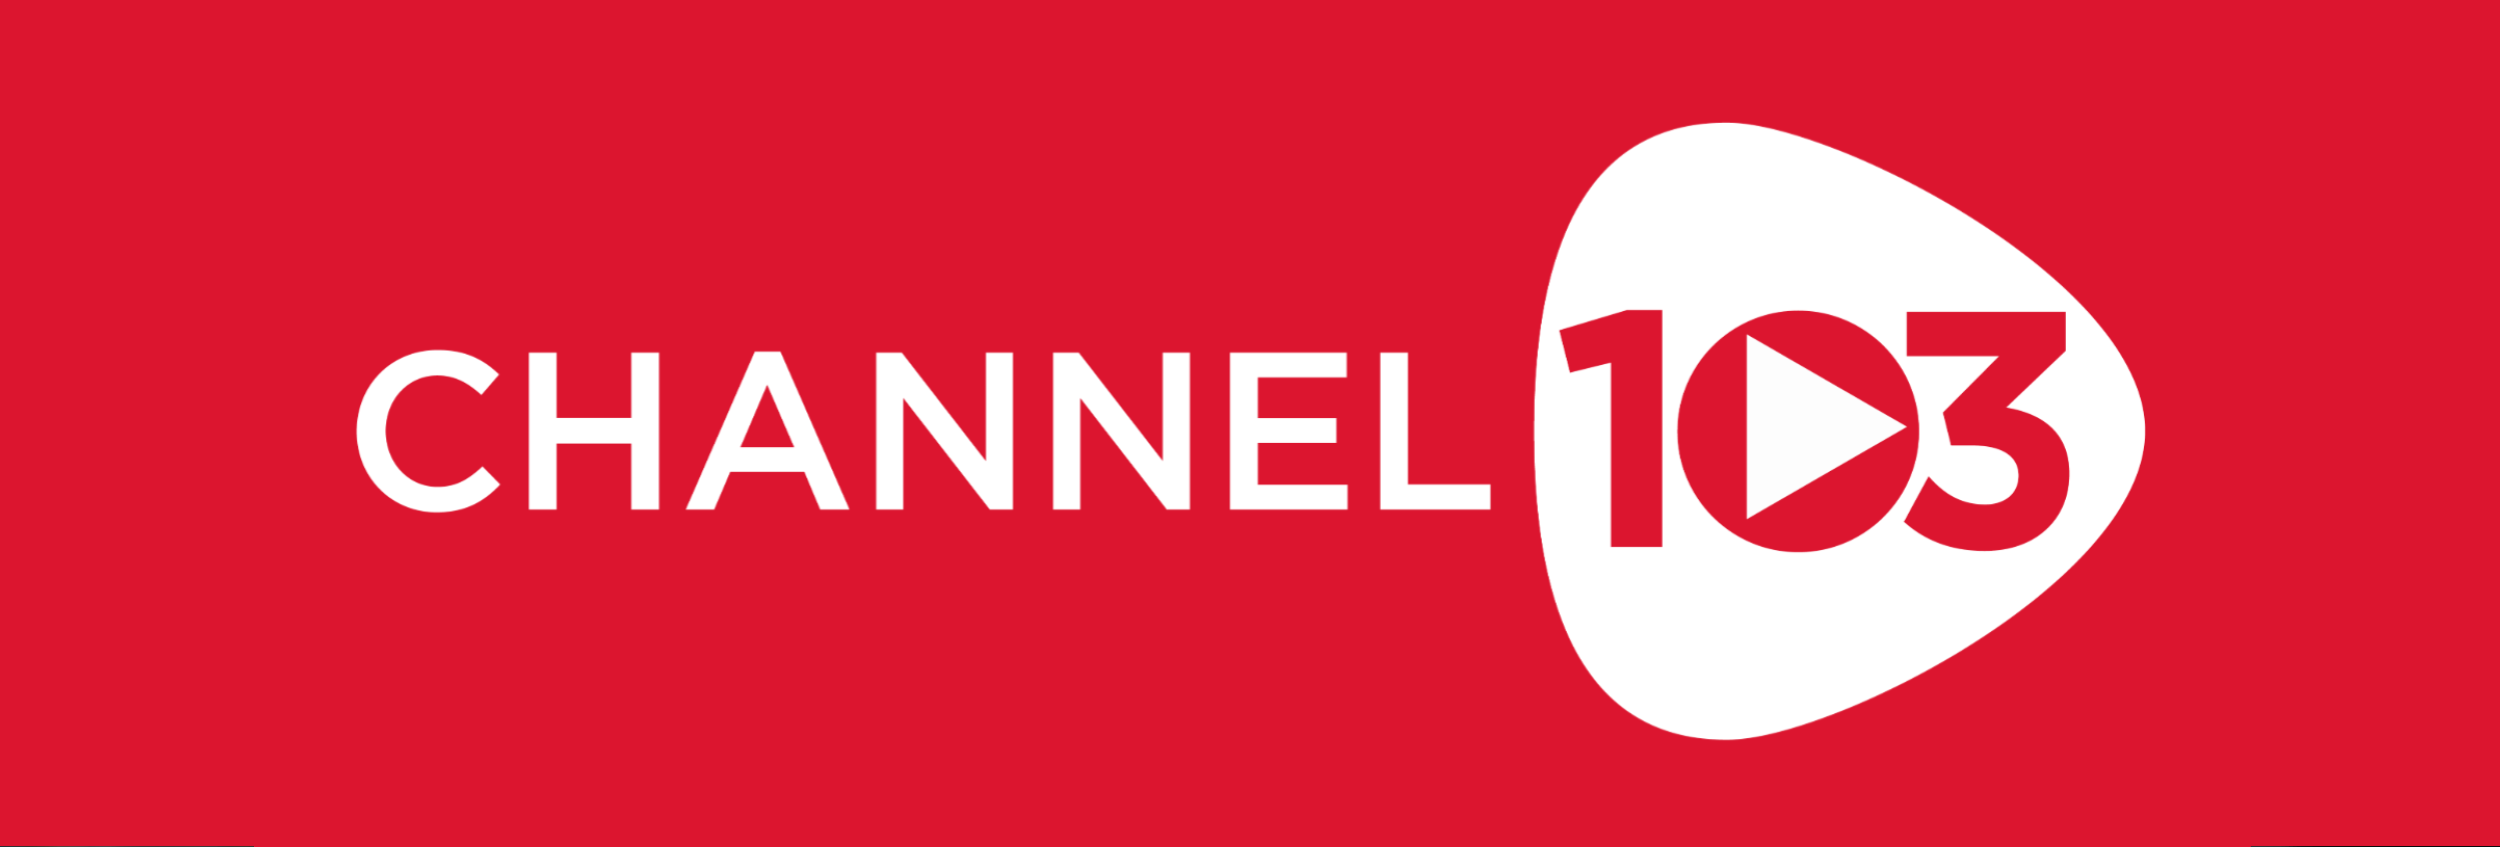 channel 103 travel news